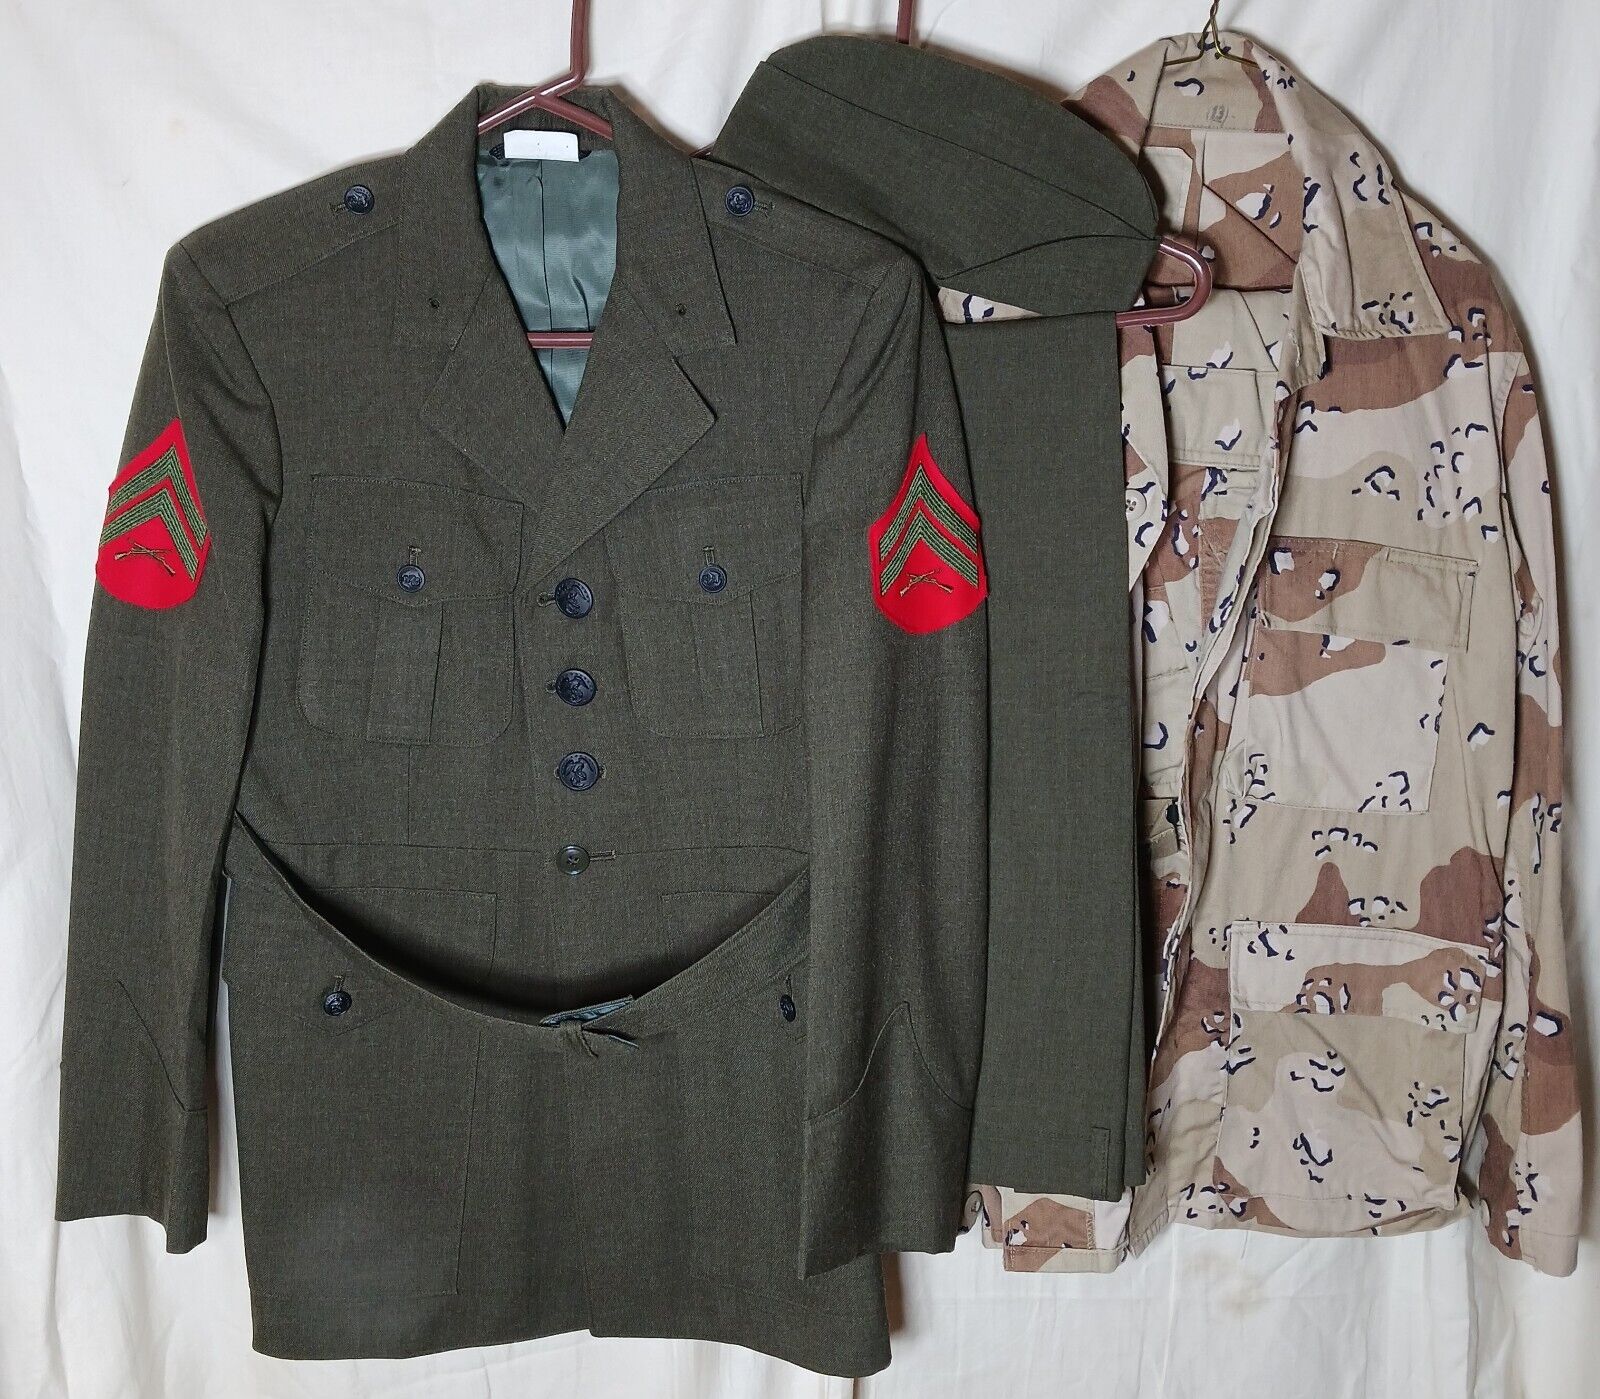 Vintage 1990's Military Issue Desert Jacket, Pants & Dress Uniform sz S Regular